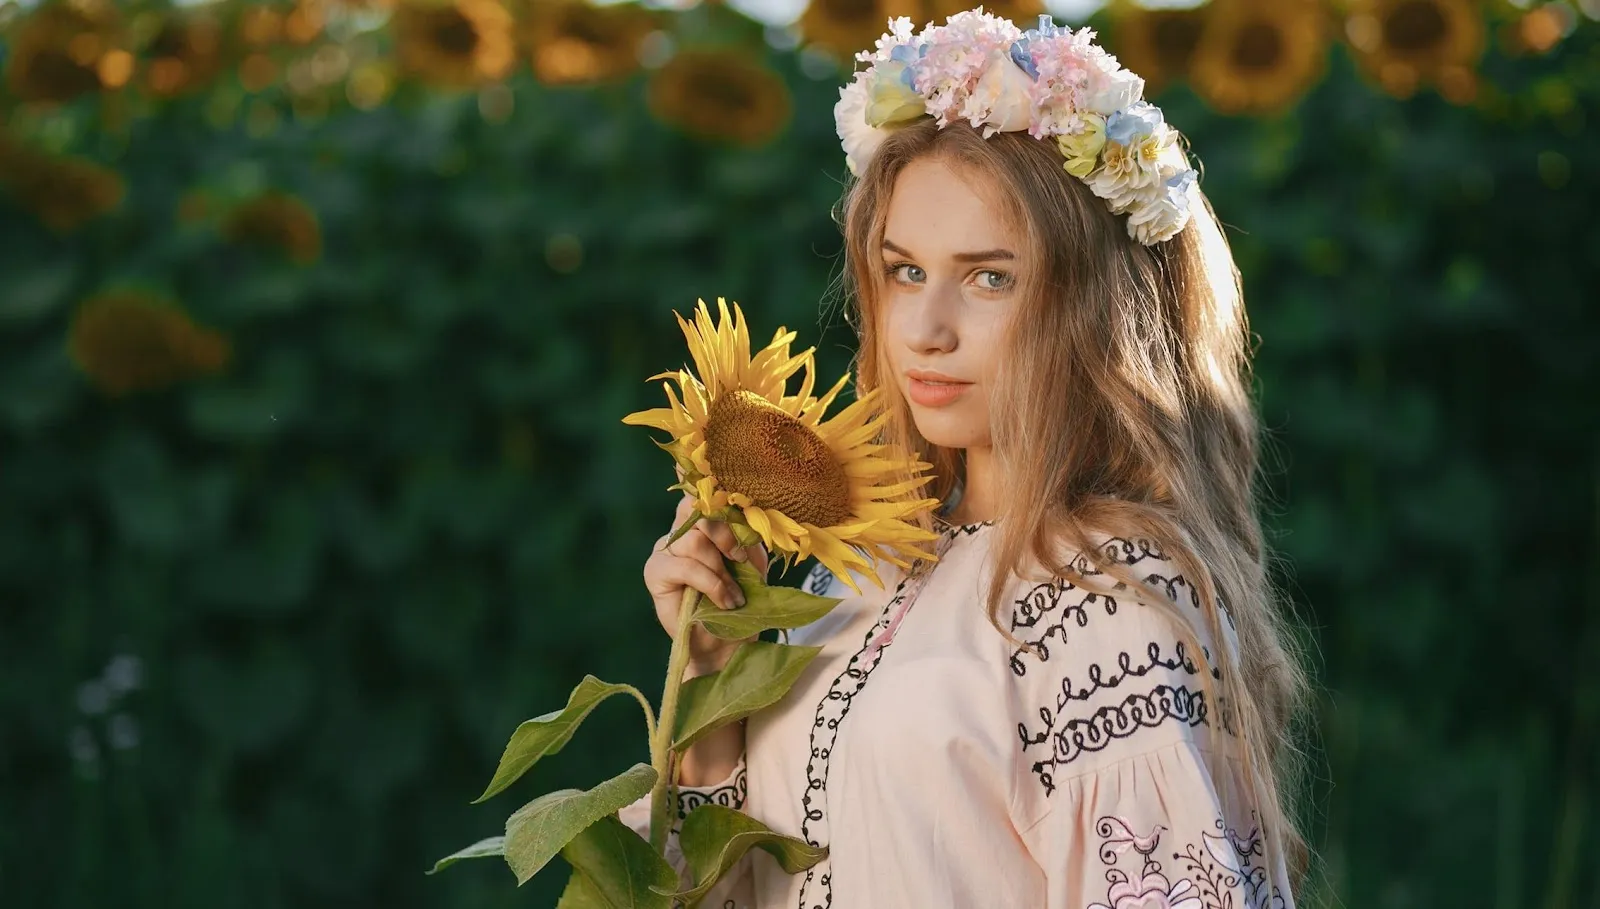 What Does a Ukrainian Woman Look Like?